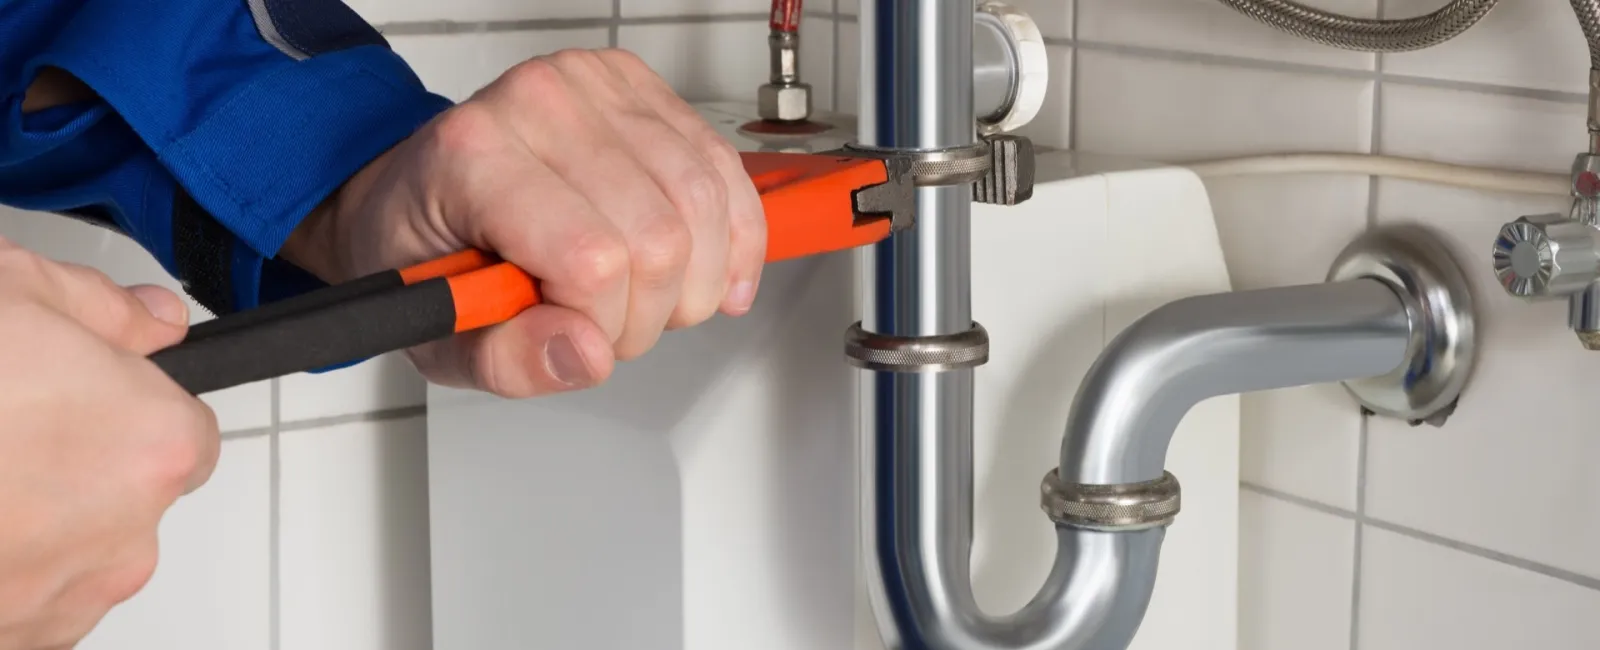 How to handle emergency plumbing problems